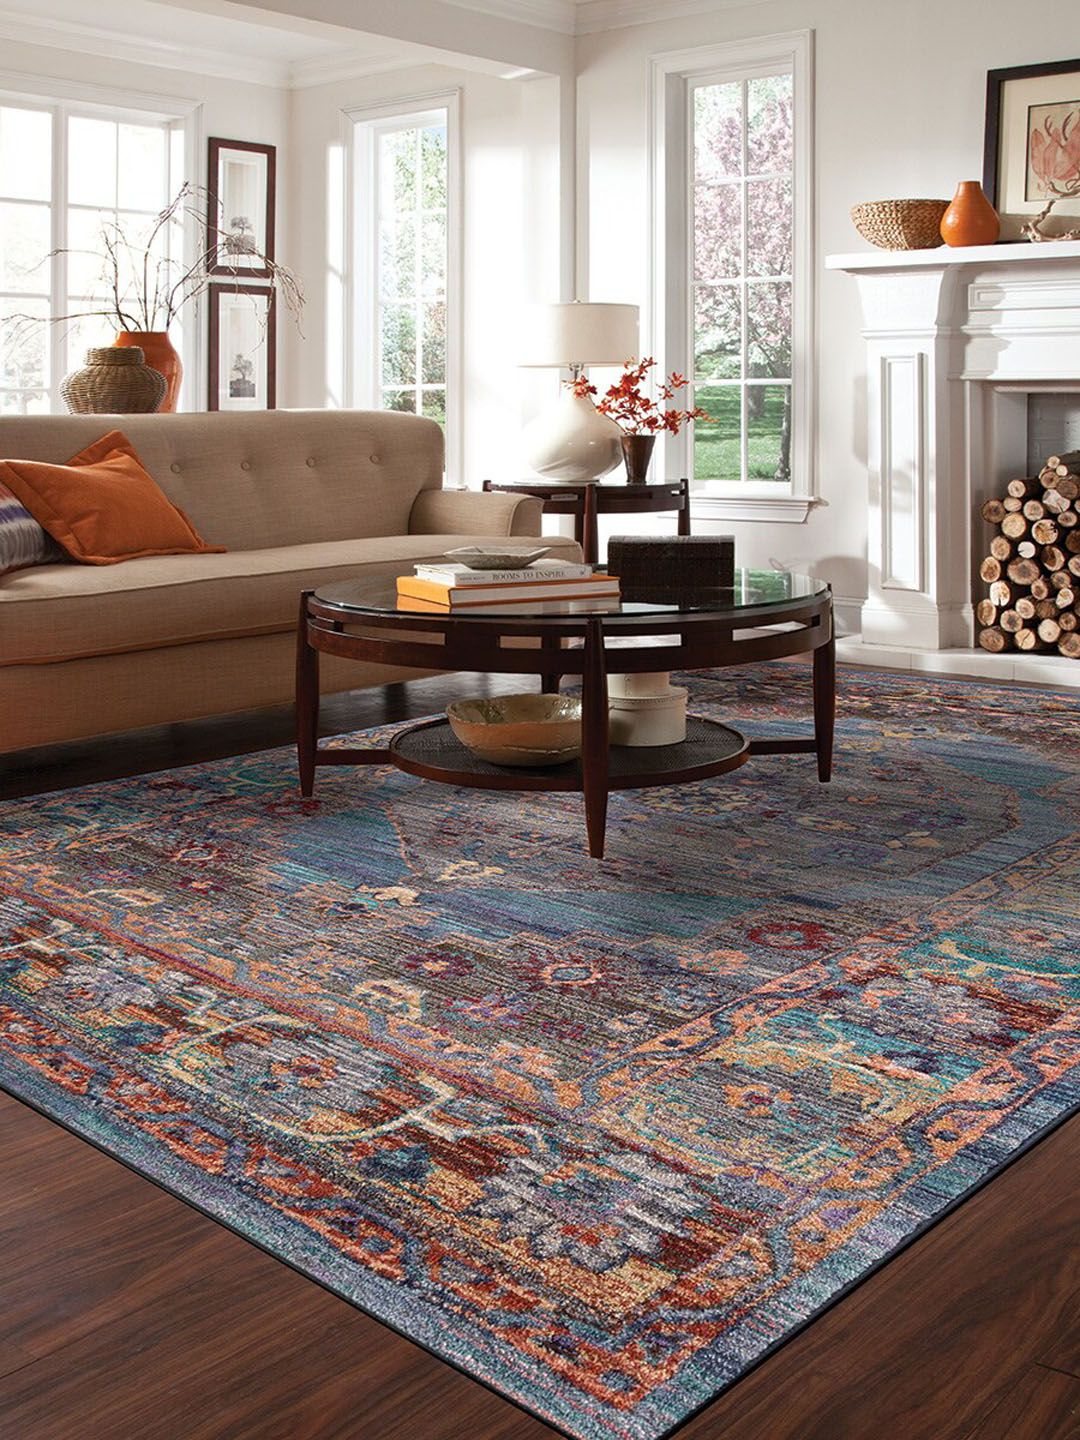 DDecor Multicolored Ethnic Motifs Traditional Carpet Price in India